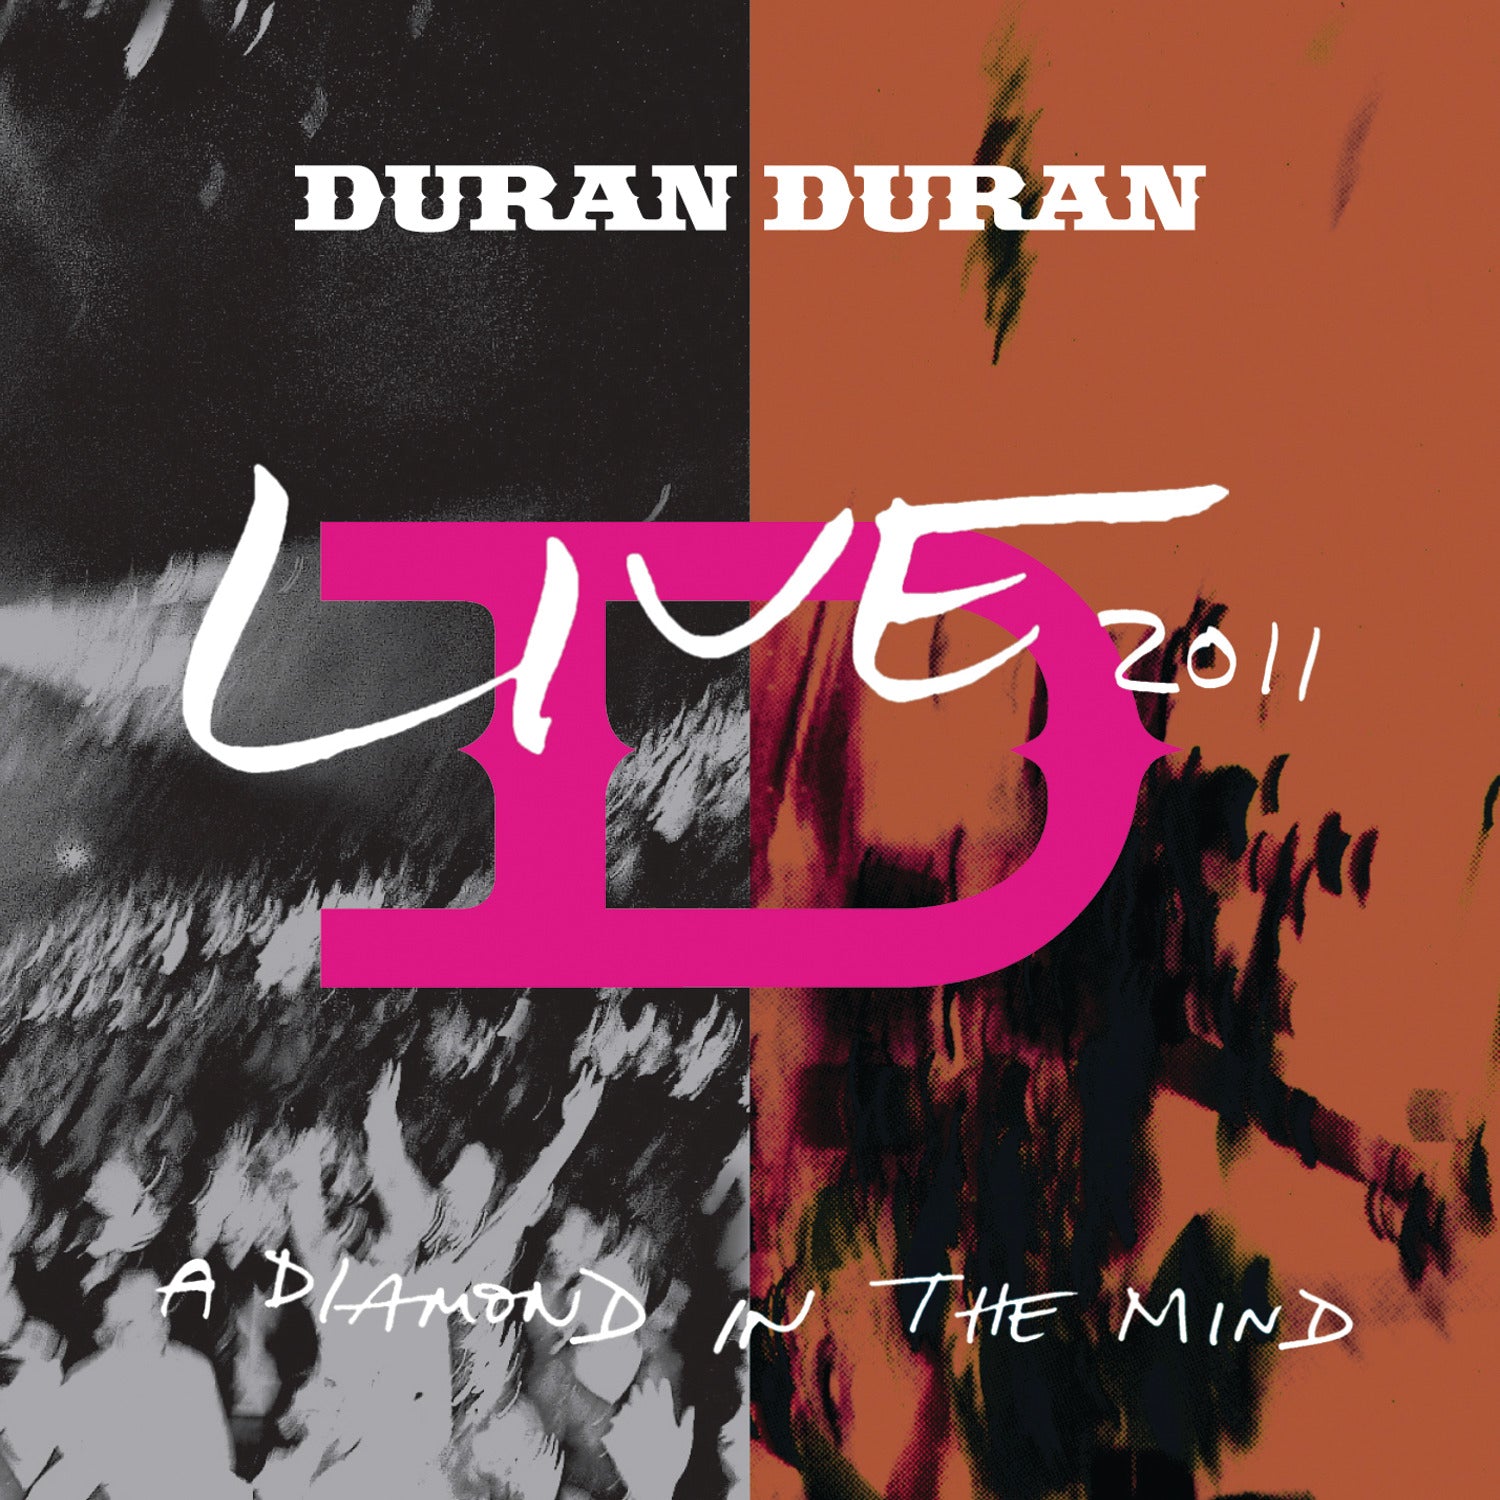 DURAN DURAN - A Diamond In The Mind (Live 2011) - 2LP - Limited Edition Vinyl